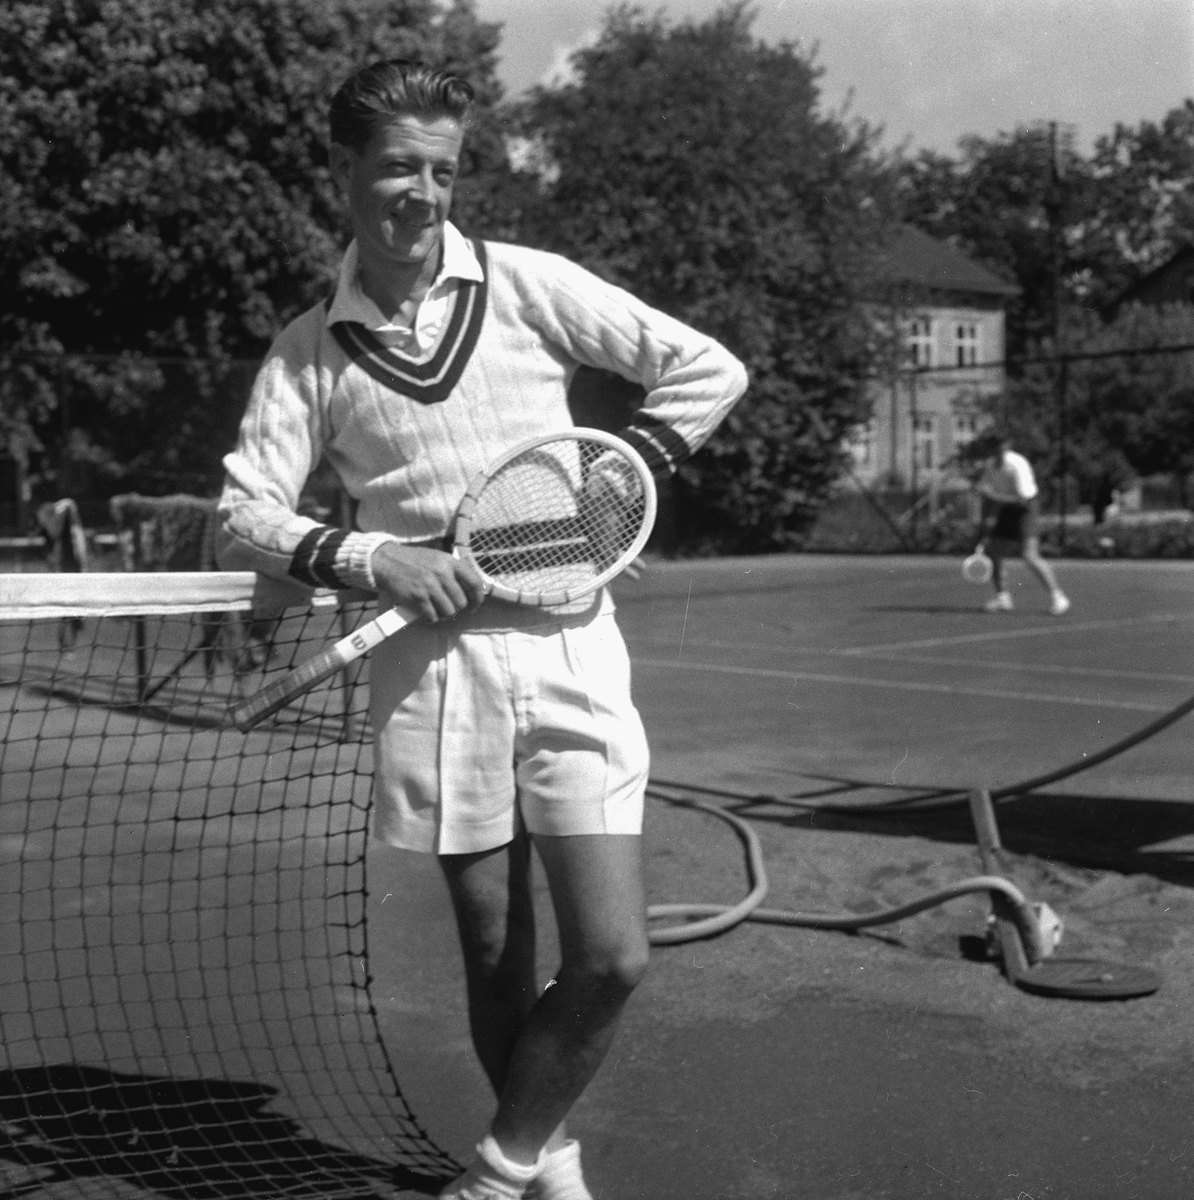 Californisk tennismästare.
5 augusti 1958.